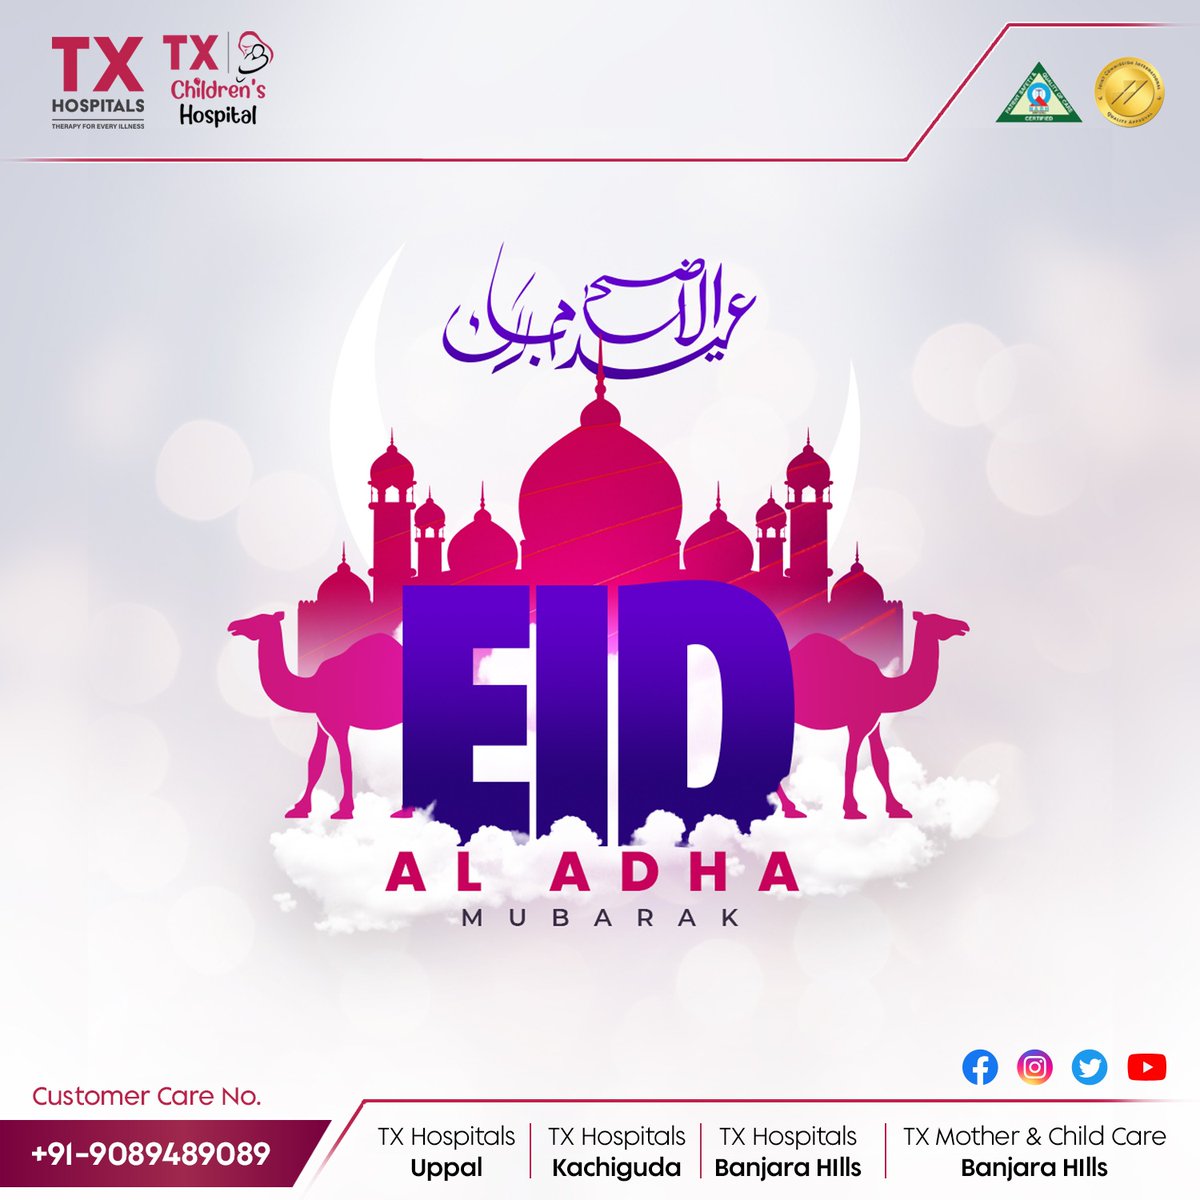 Wishing you a blessed and joyous Bakrid (Eid Al Adha)! May this festival bring peace, prosperity, and harmony to your life. Eid Mubarak! ✨🌙🌙

#BakridMubarak #EidAlAdha #FestivalOfSacrifice #EidBlessings #JoyousCelebration #PeaceAndProsperity #HarmonyAndUnity #TXHospitals